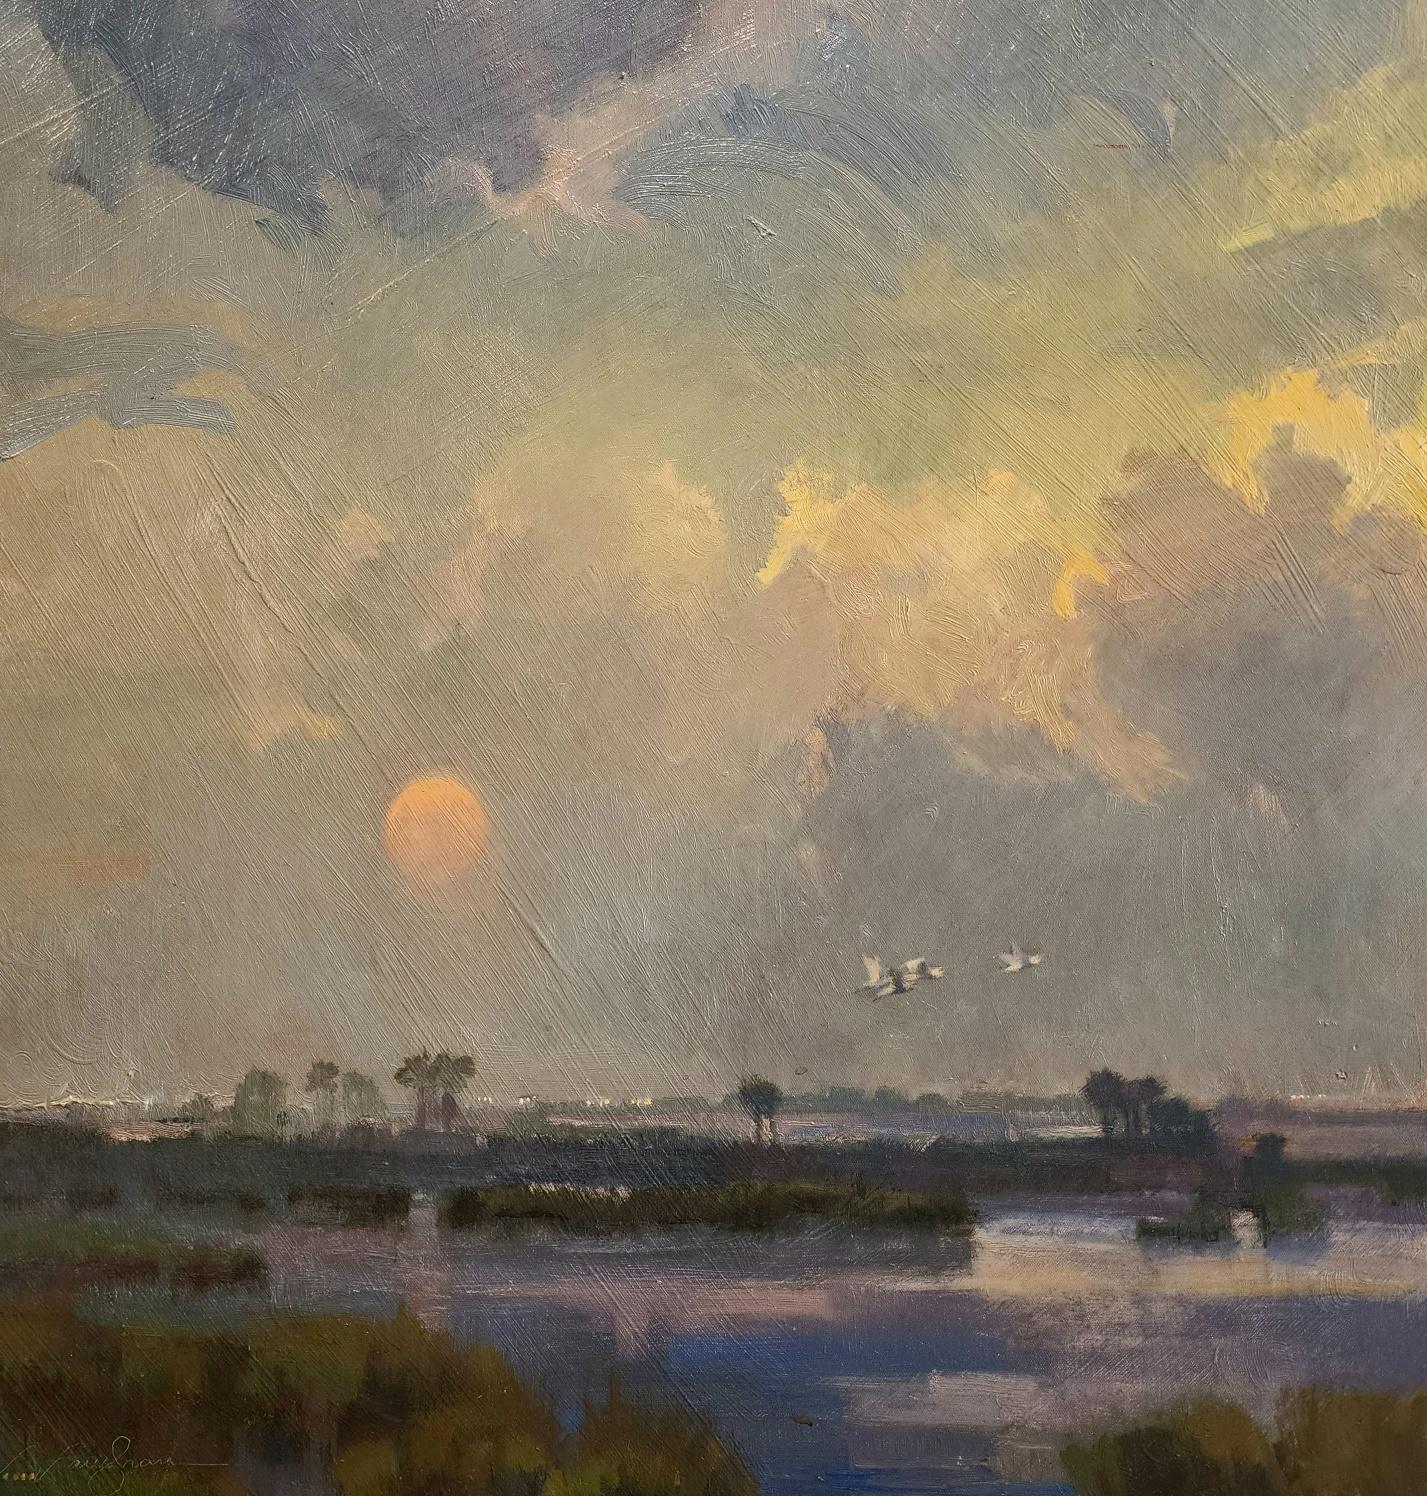  Vor Harvey (Hurrikan 2017)  Impressionismus Rockport Texas Golfküste – Painting von Virginia Vaughan 